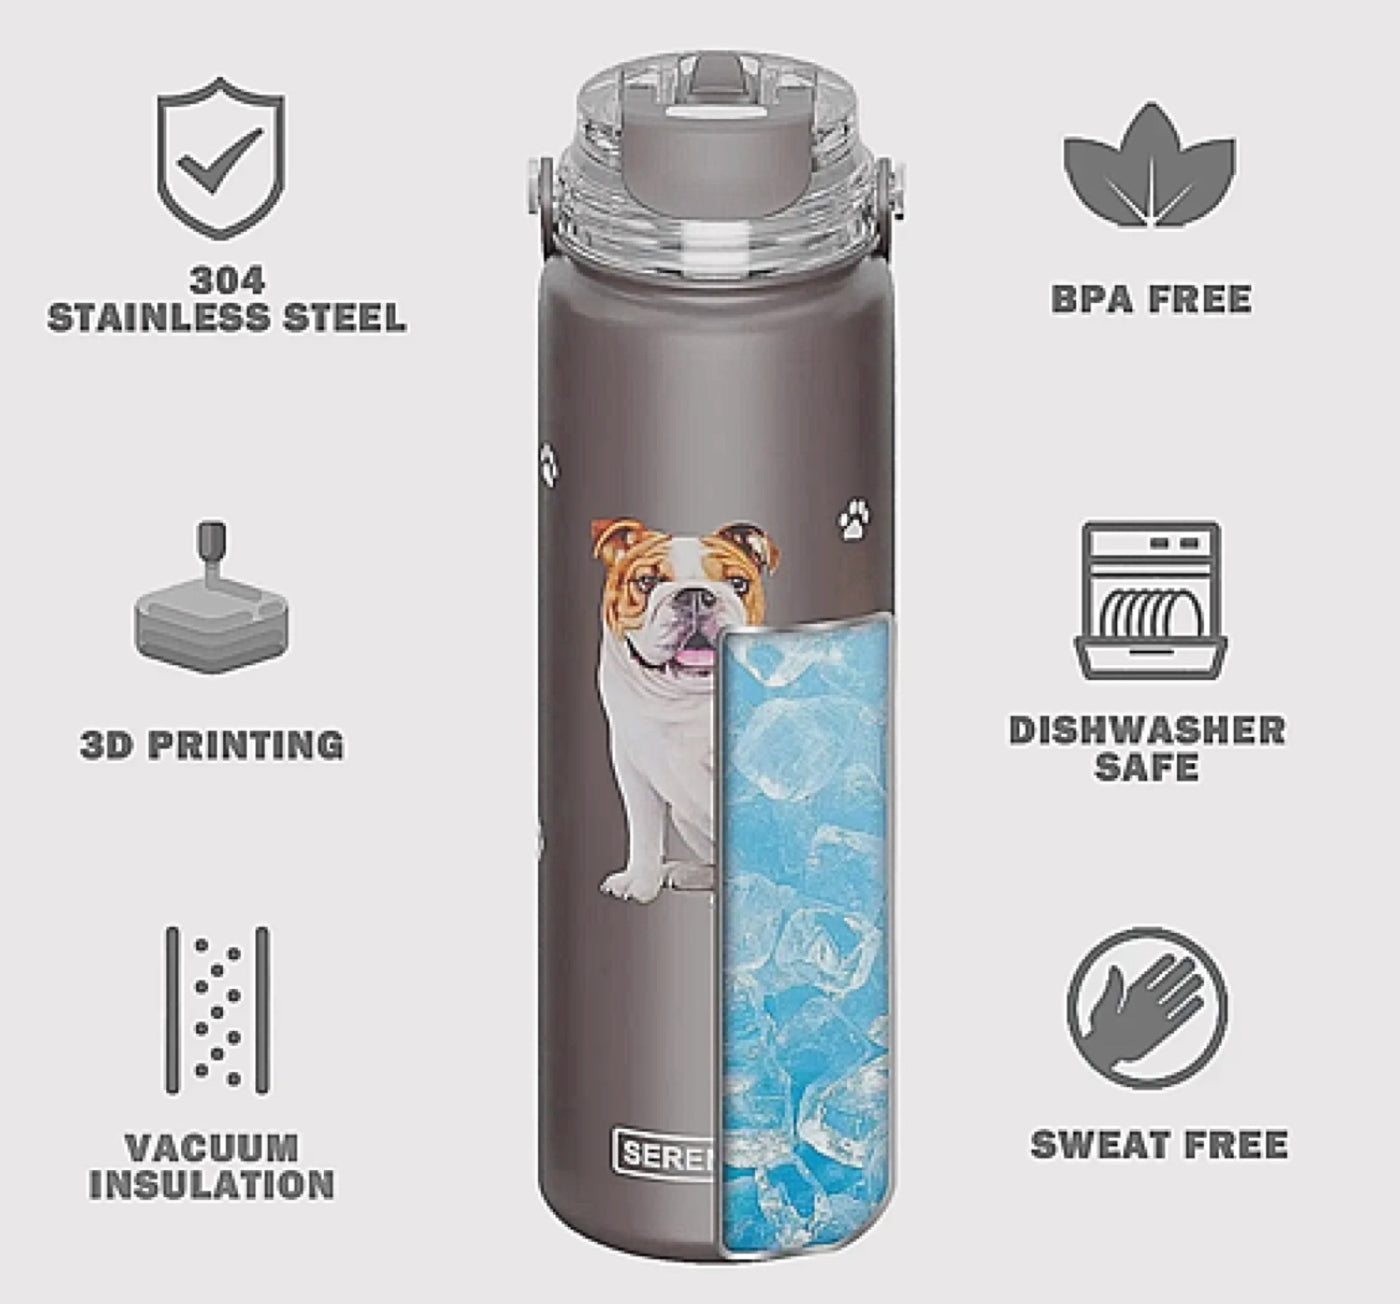 Dishwasher Safe Stainless Steel Water Bottles